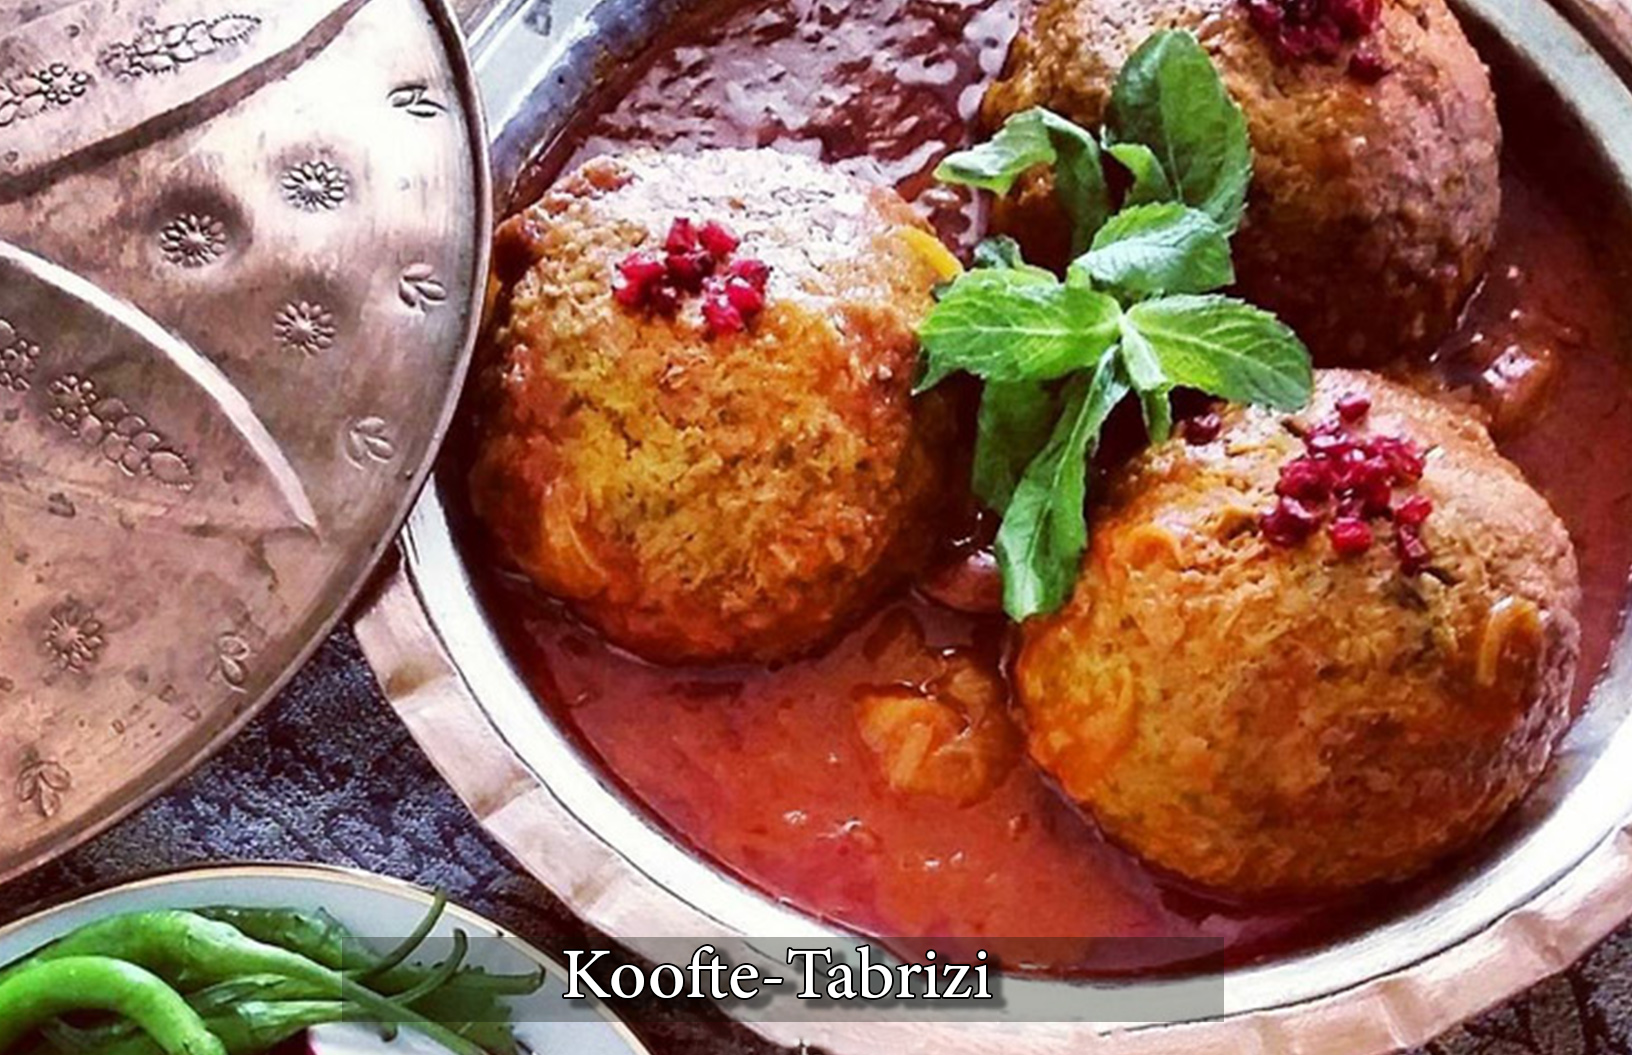 Koofte-Tabrizi